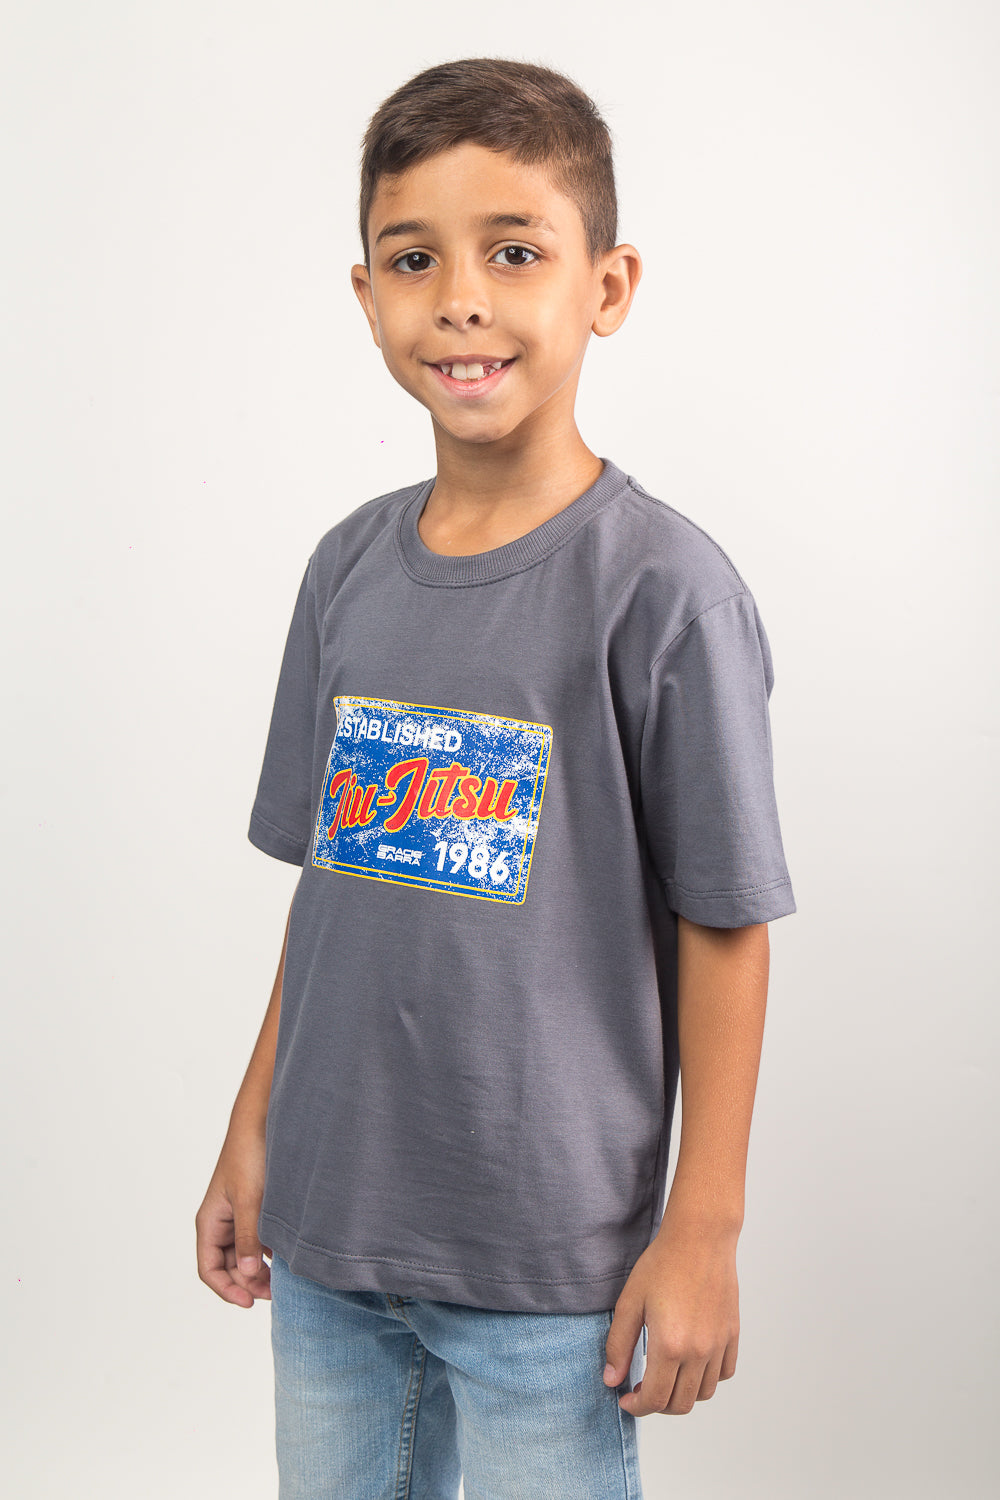 Camiseta JJ Postcard Infantil - Cinza claro